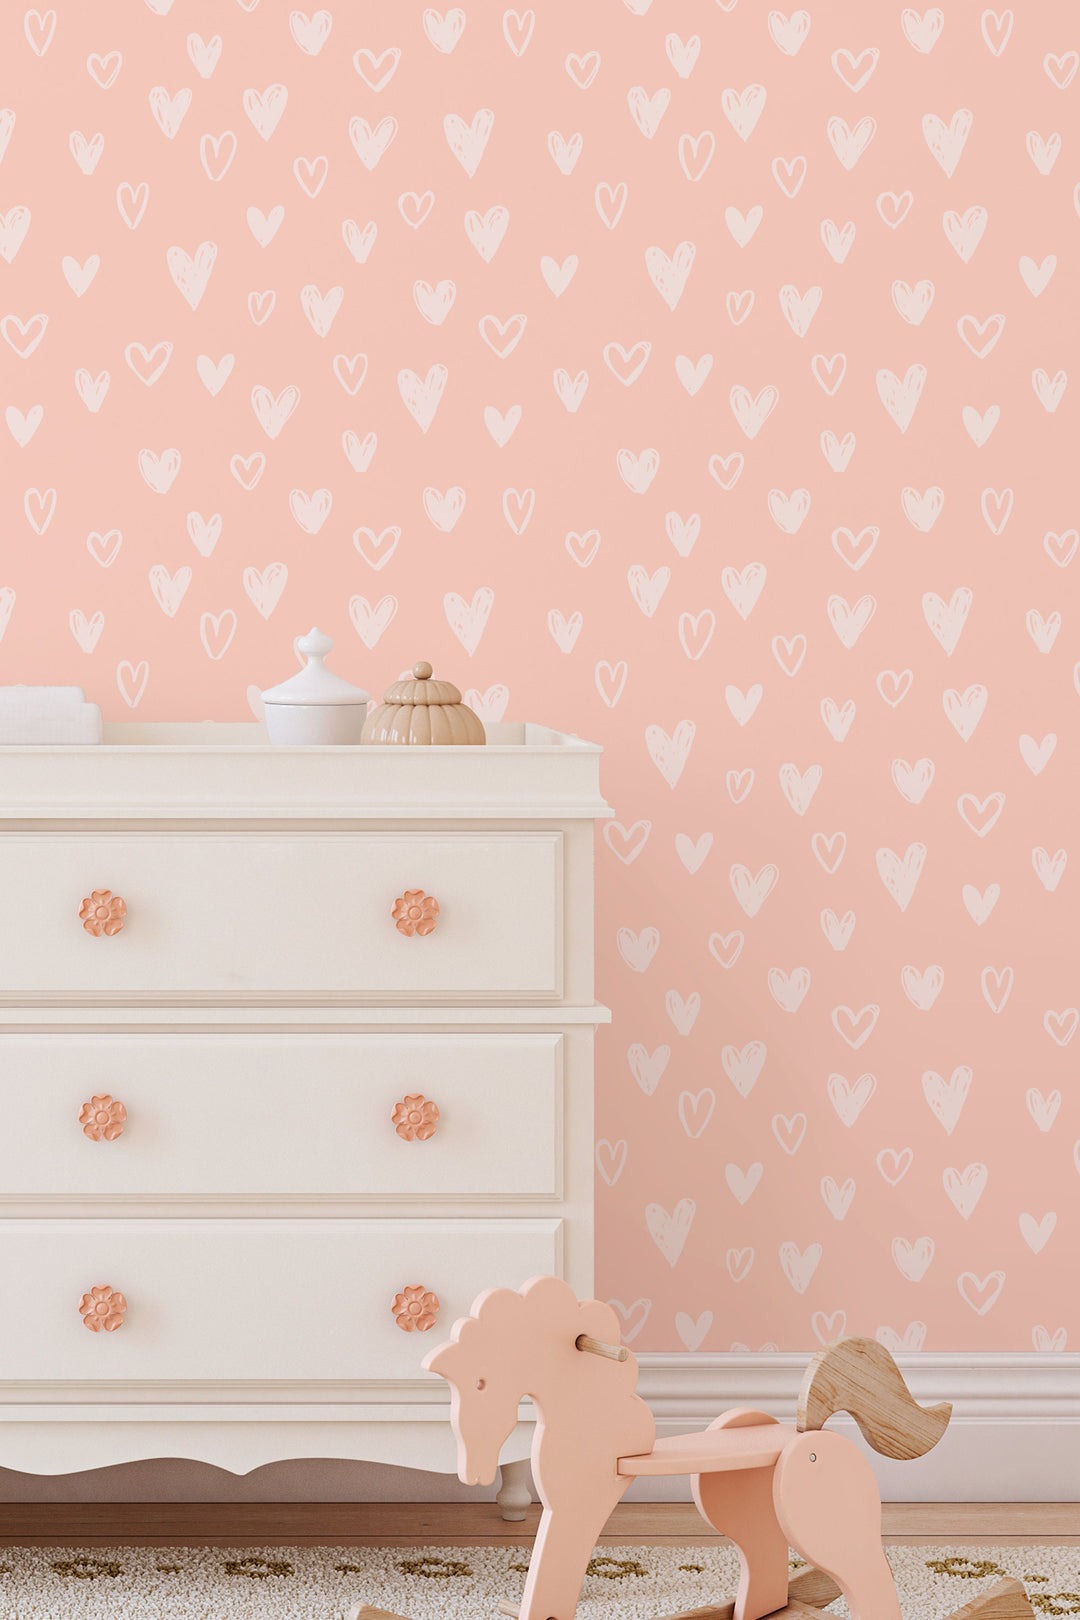 White Boho Hearts on Beige Background, Kids Room Pattern Wallpaper #53055